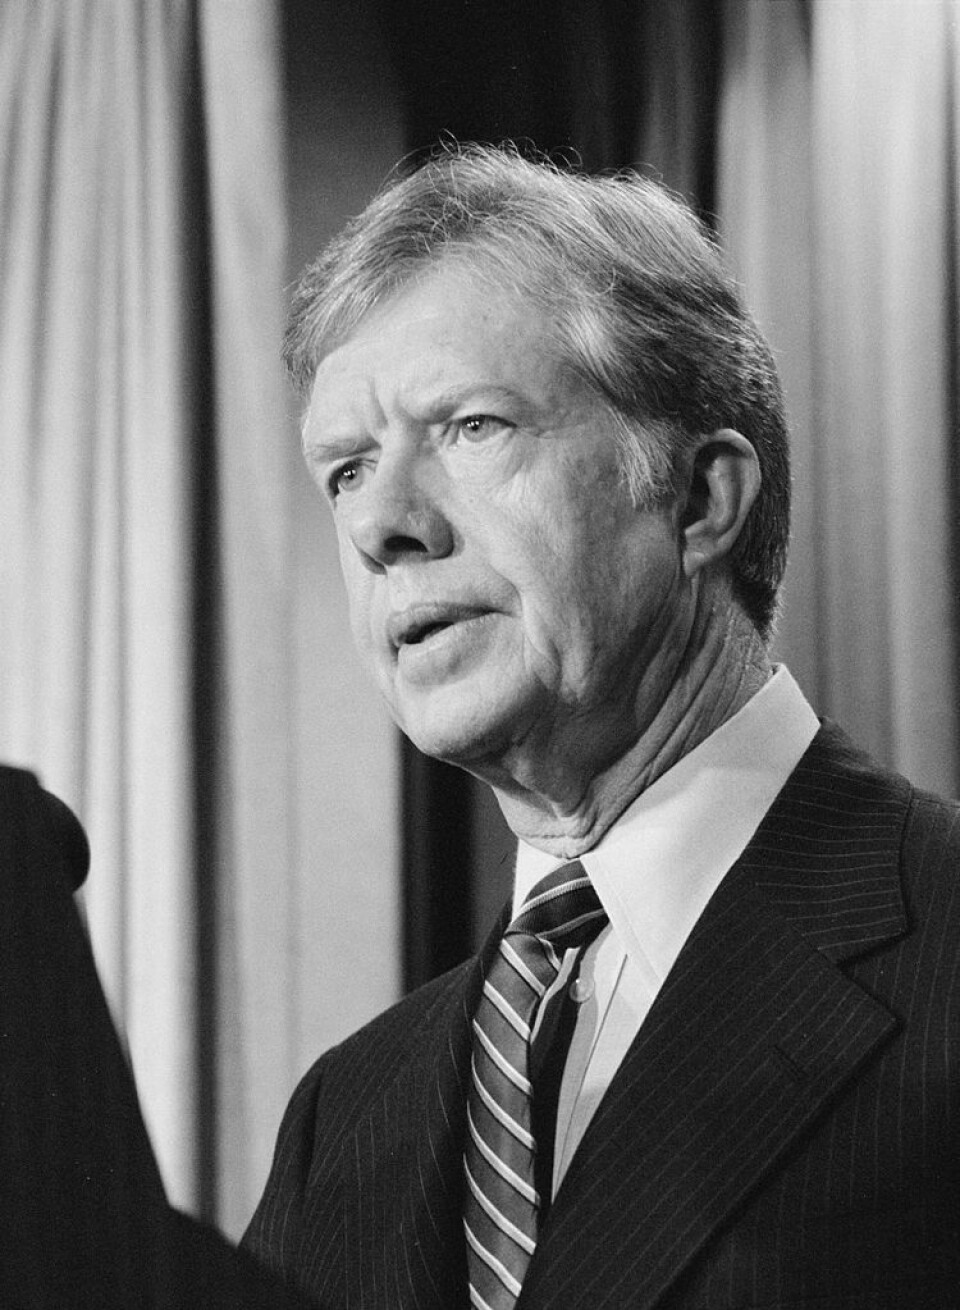 Jimmy Carter, USAs 39. president. (Foto: Marion S. Trikosko/Library of Congress)